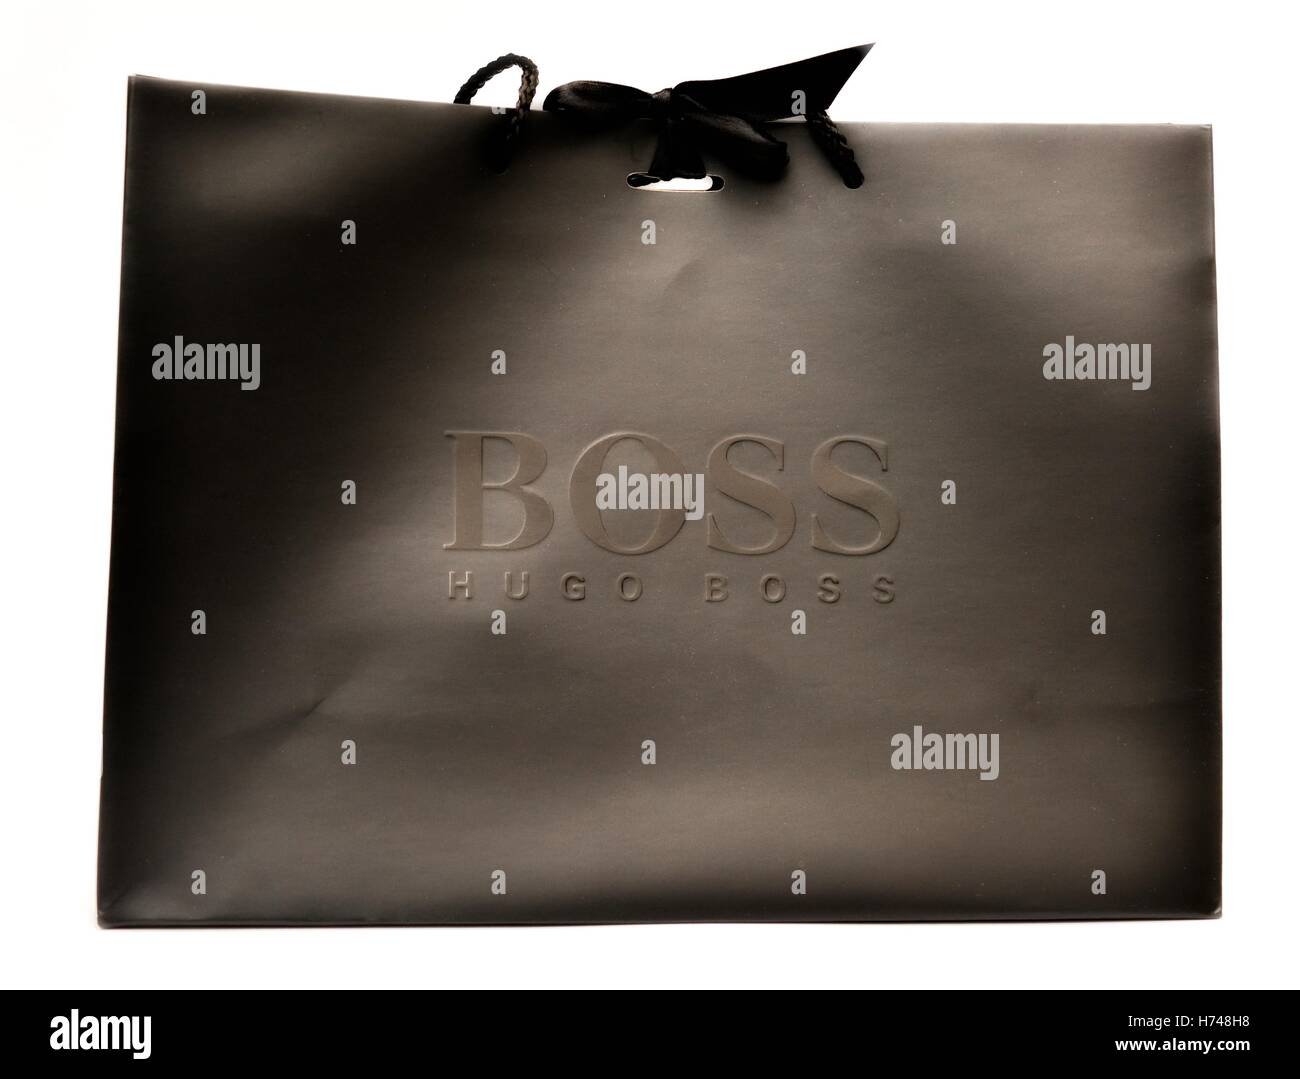 A Hugo Boss gift carrier bag Stock Photo - Alamy